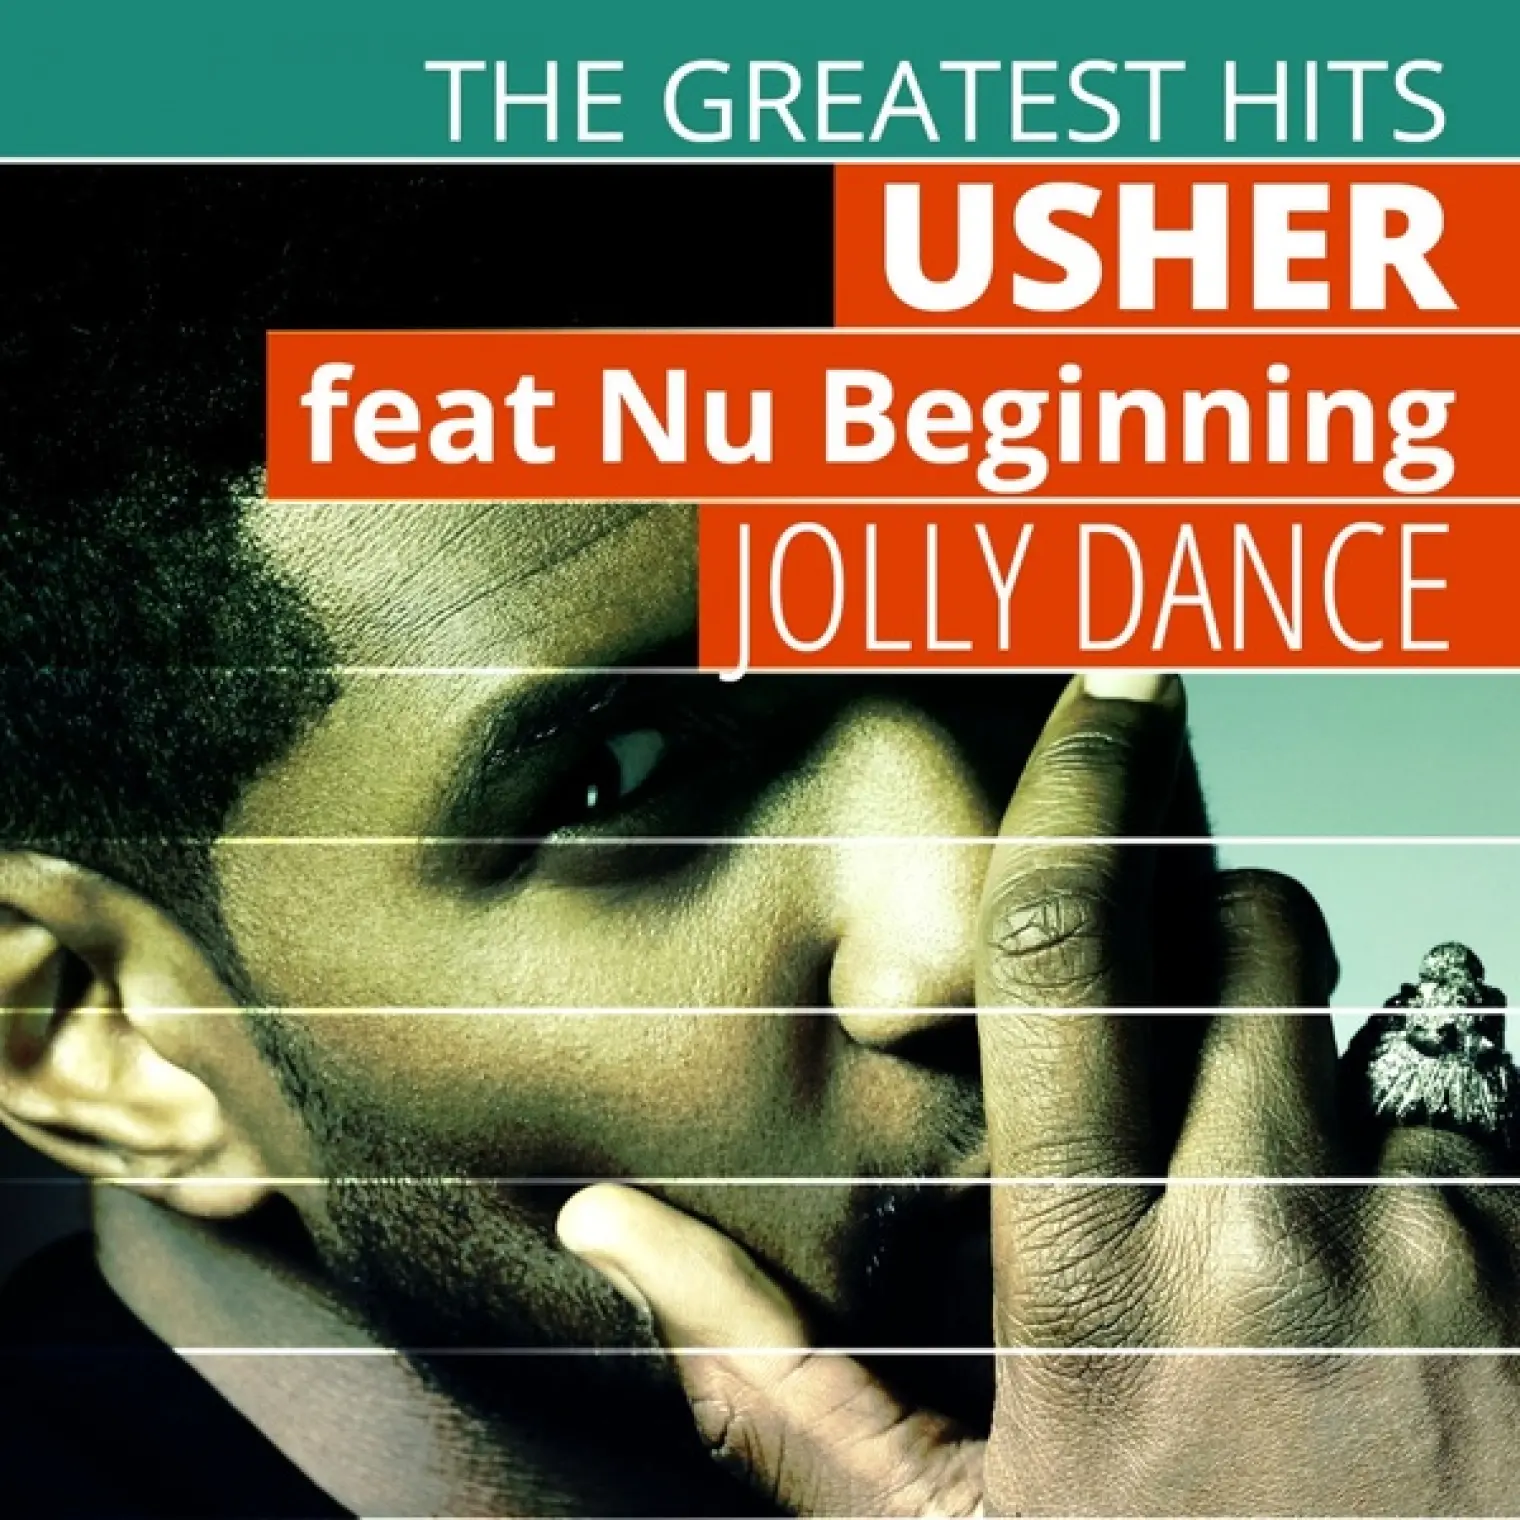 The Greatest Hits: Usher  - Jolly Dance -  Usher 